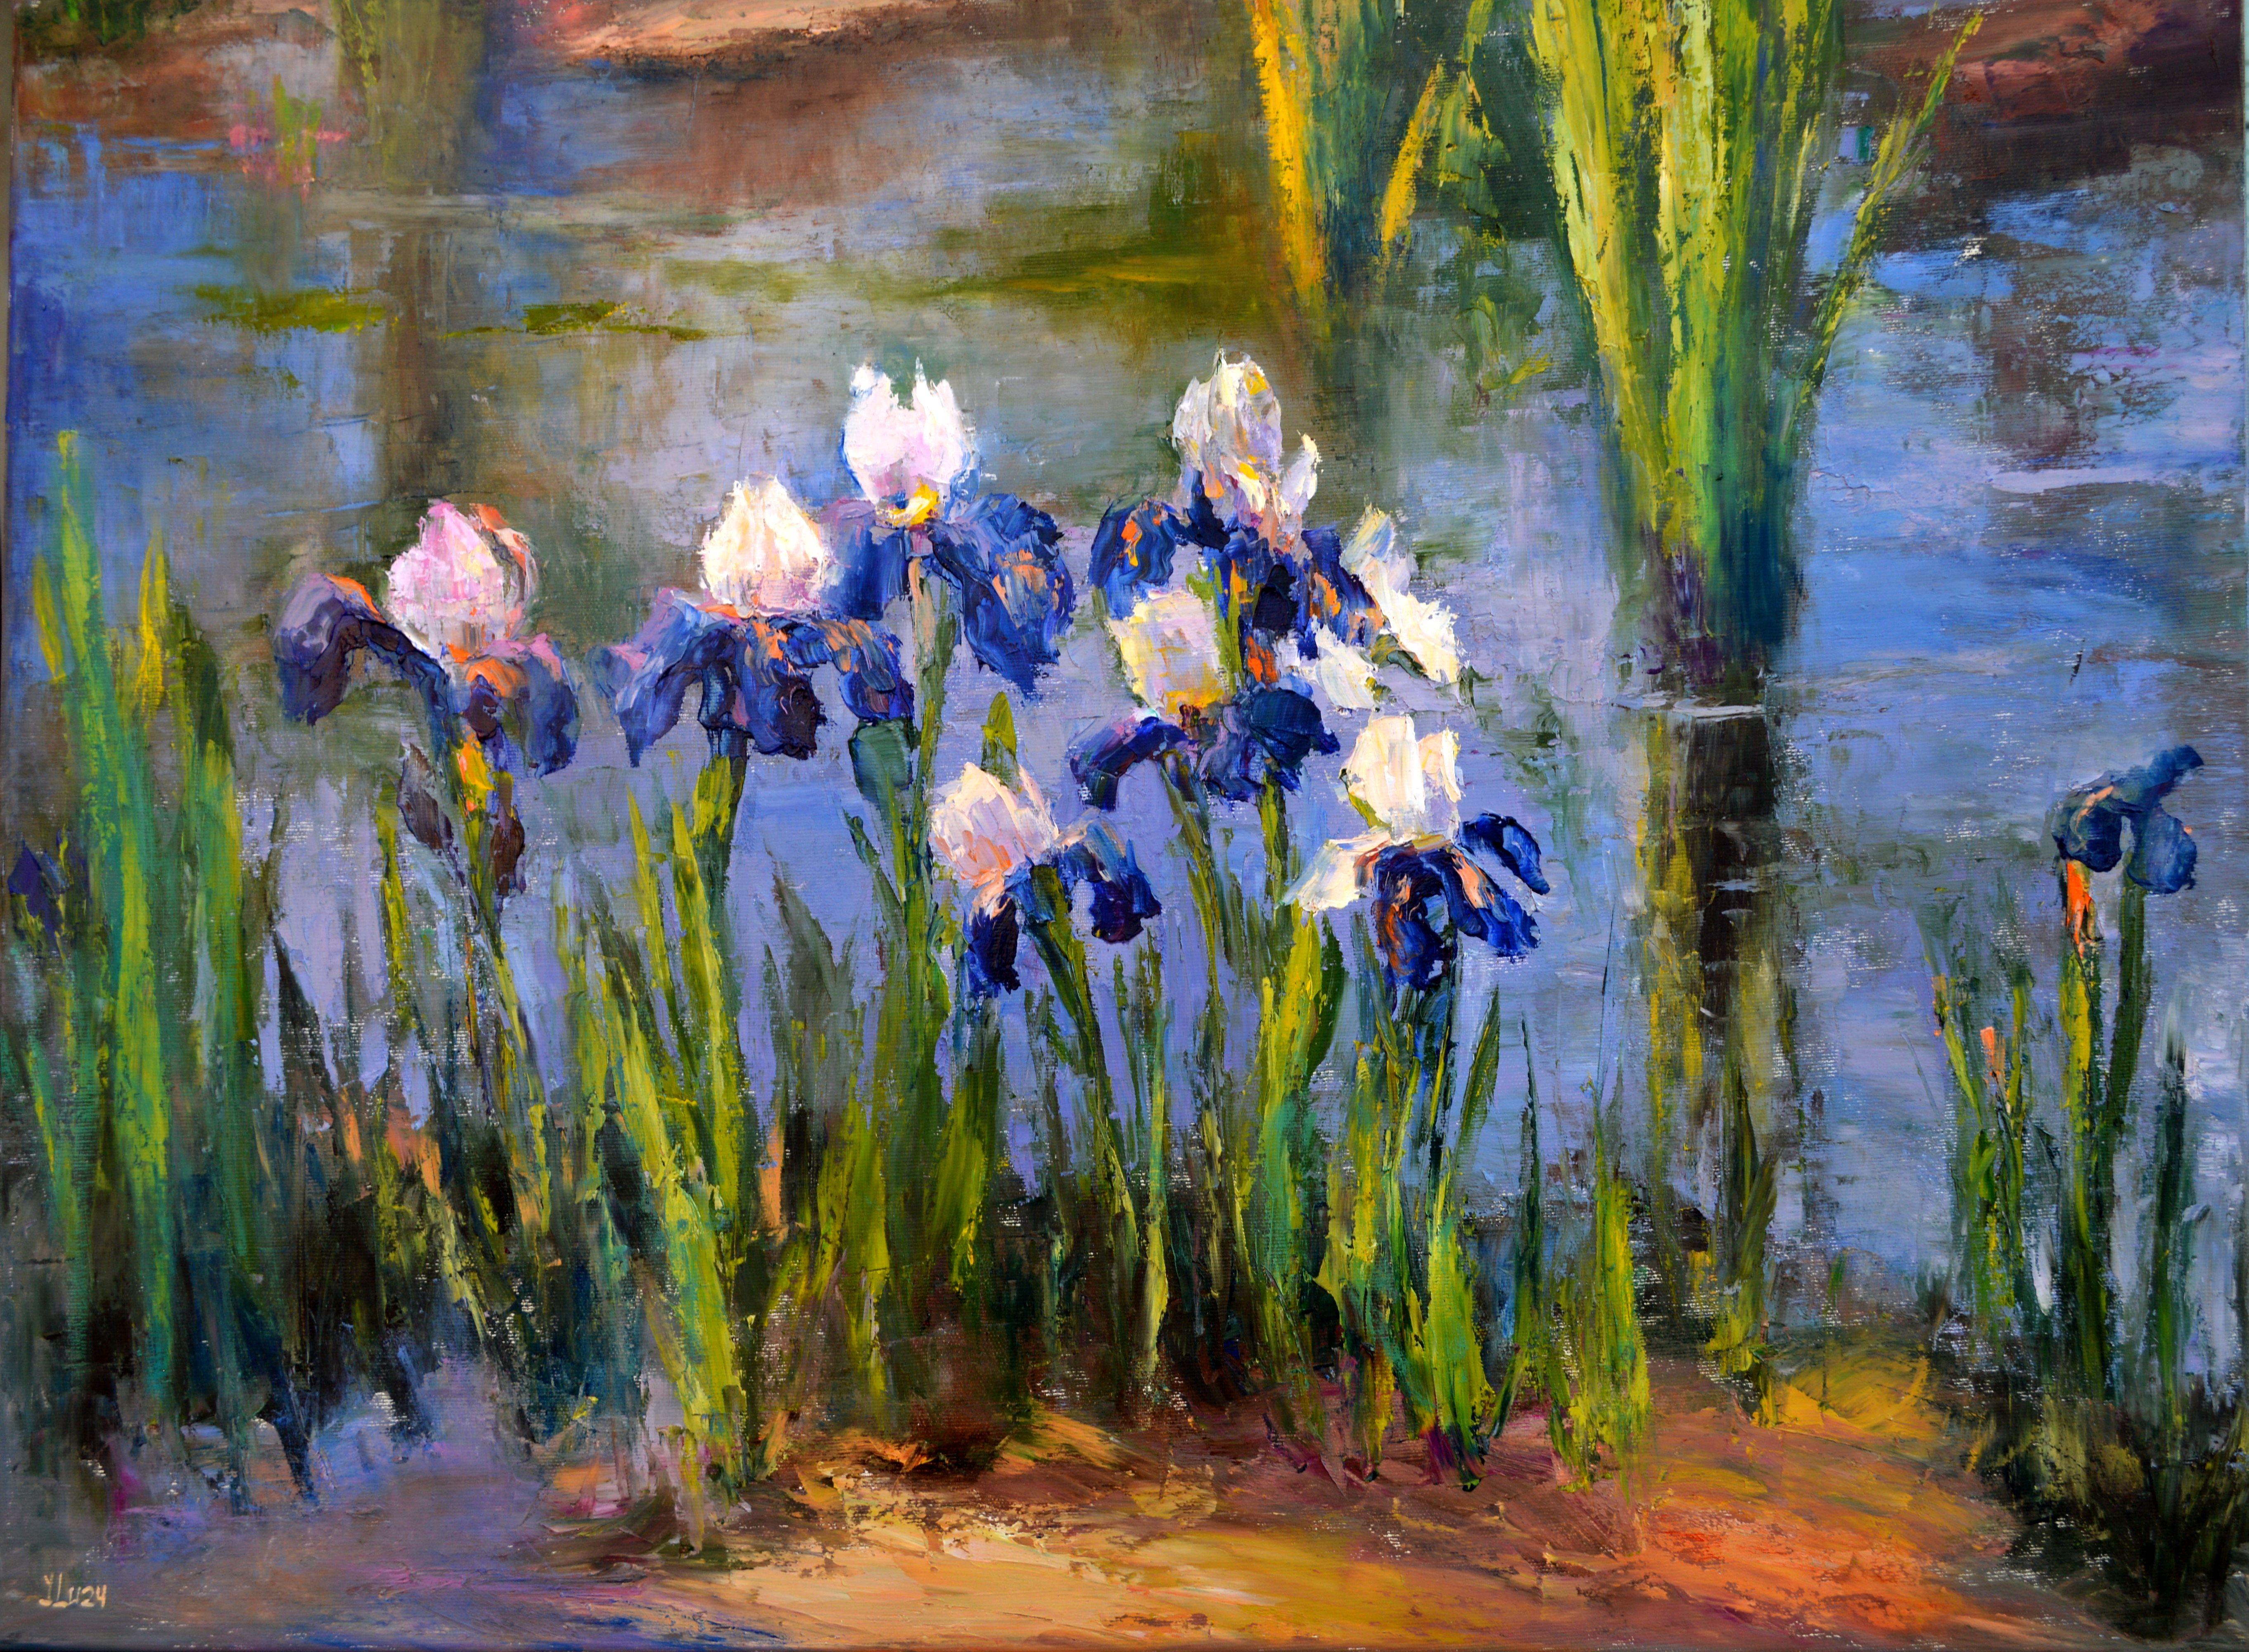 Elena Lukina Landscape Painting - Pond with beautiful irises 60Х80 oil on canvas